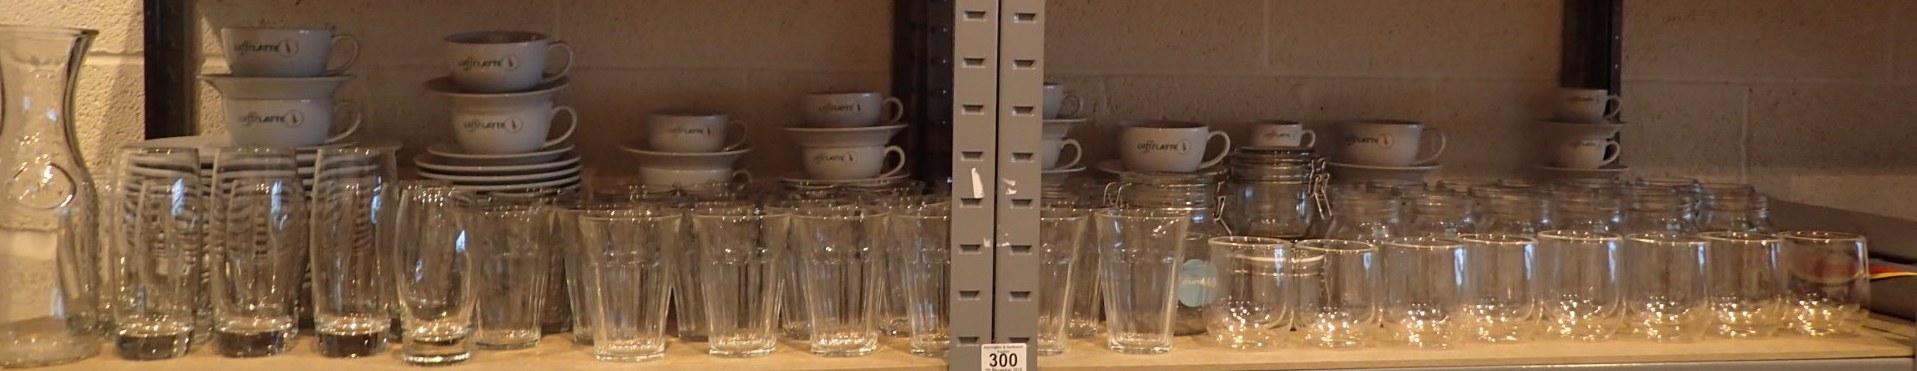 Two shelves of caffelatte cup saucers plates glasses and kilner jars